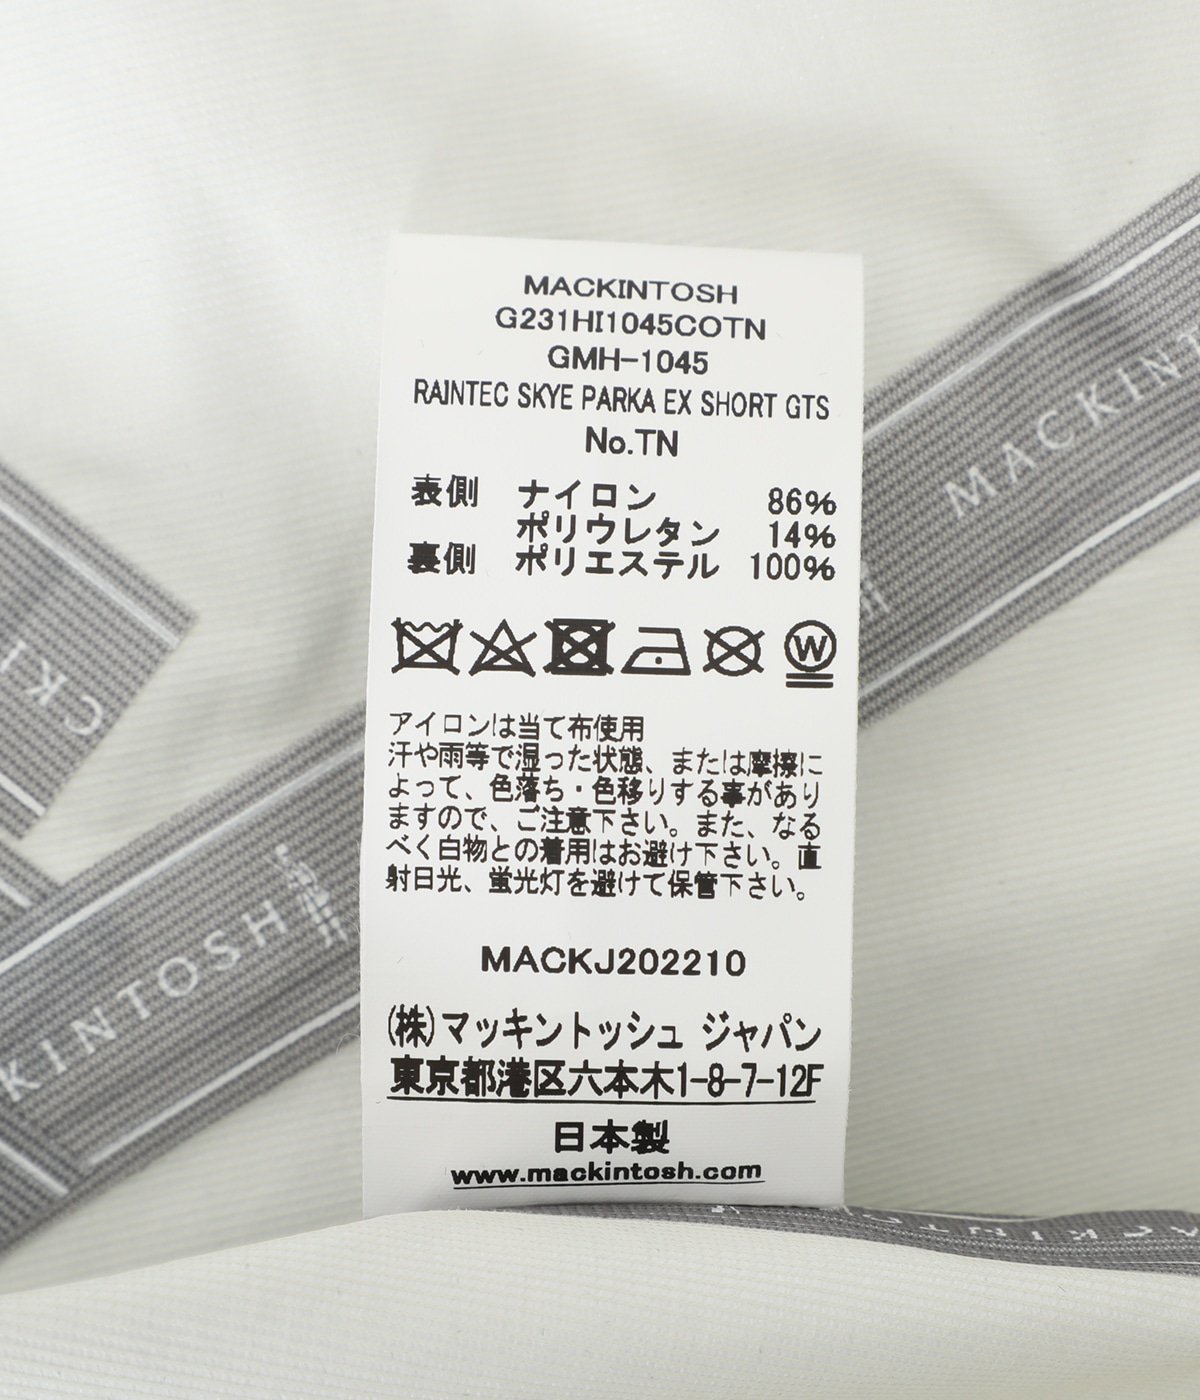 RAINTEC SKYE PARKA EX SHORT GTS | MACKINTOSH(マッキントッシュ